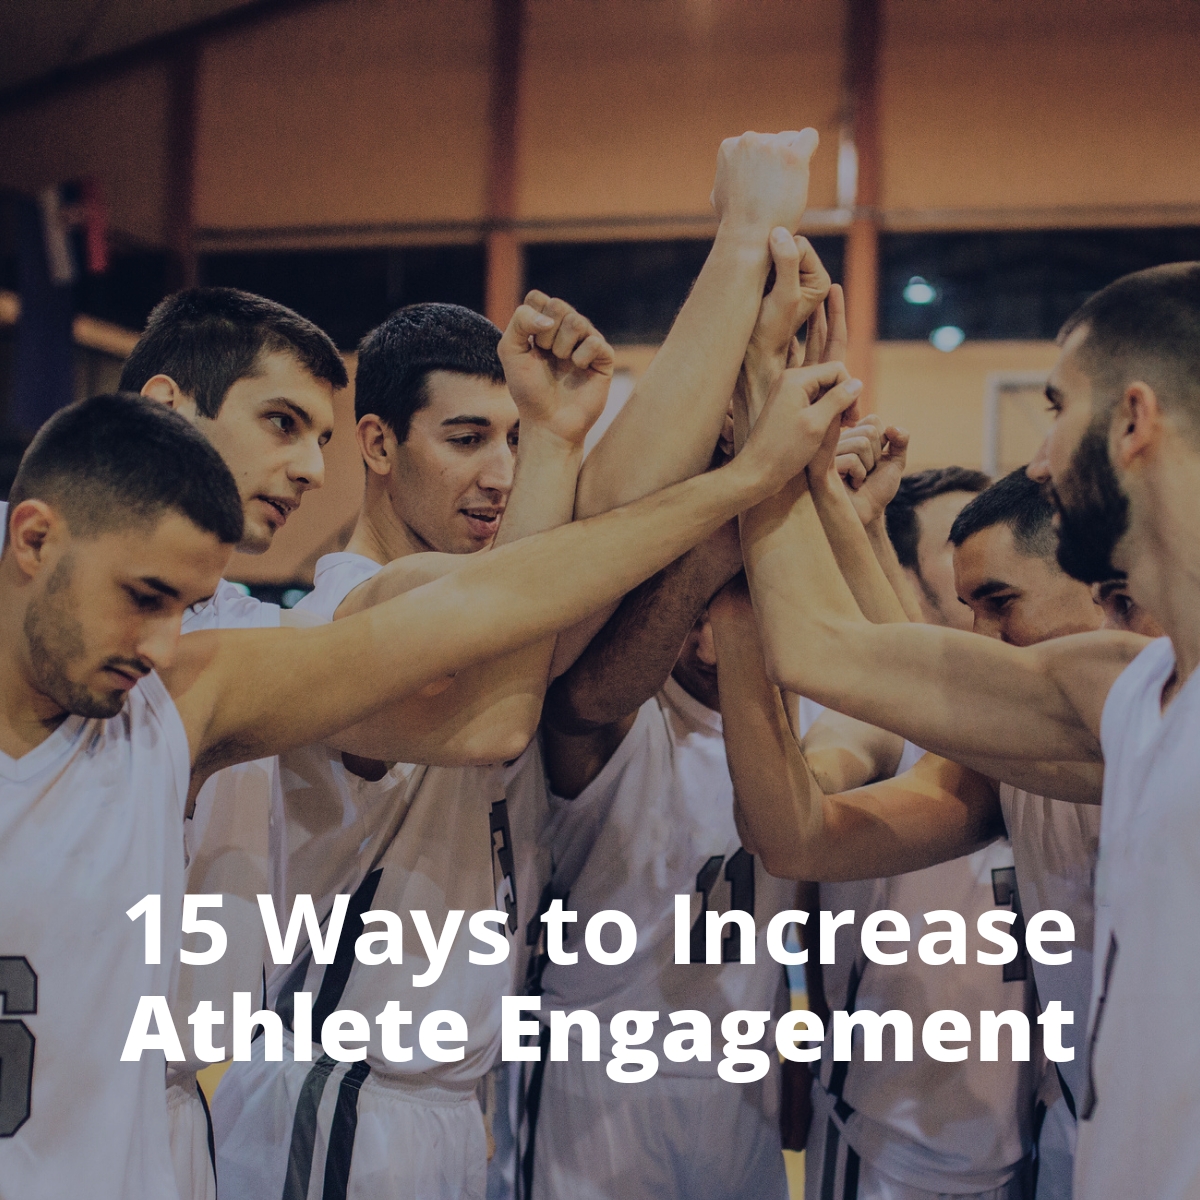 15 Ways to Increase Athlete Engagement